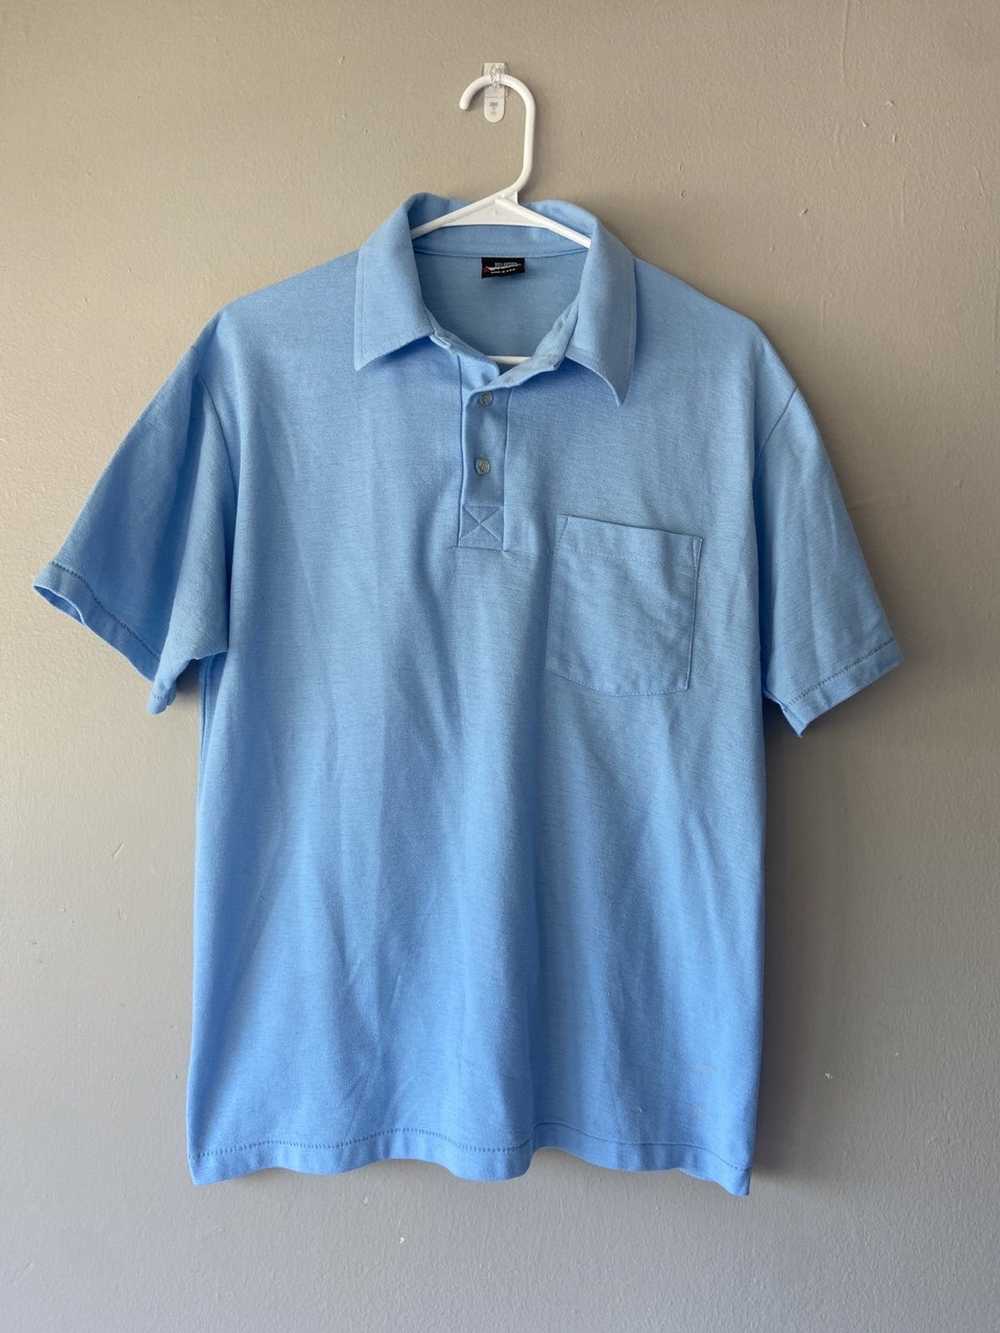 Vintage Vintage baby blue polo shirt - image 1